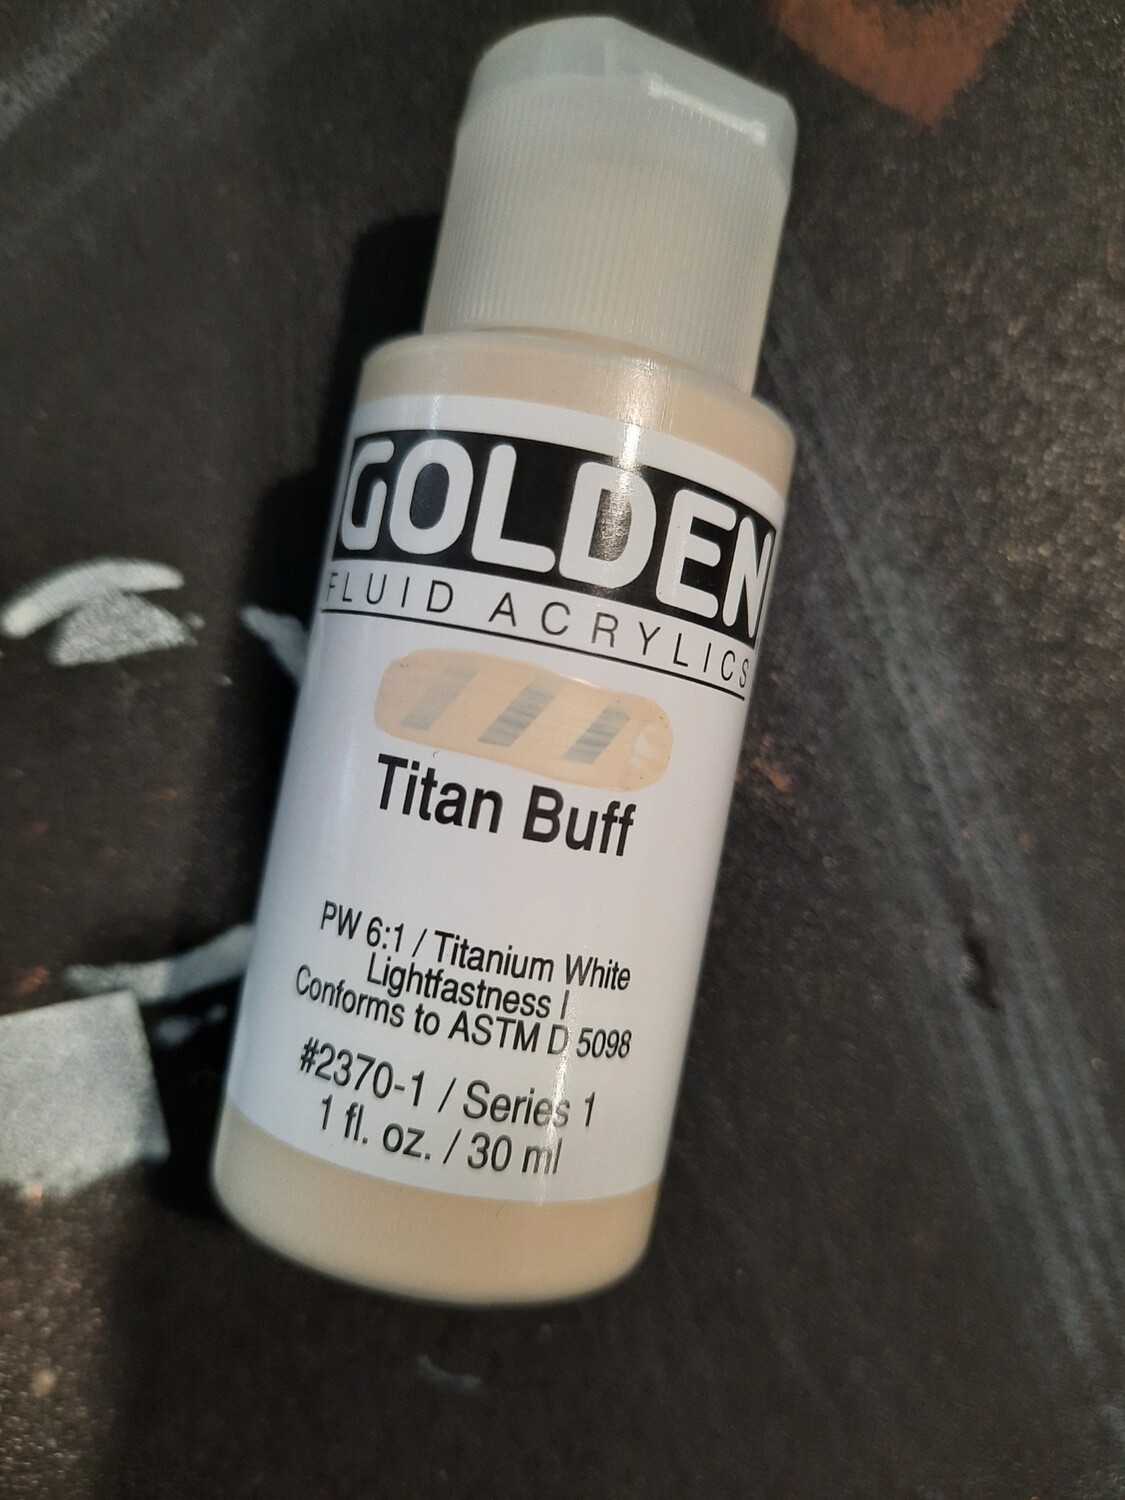 Titan buff Fluid Acrylic